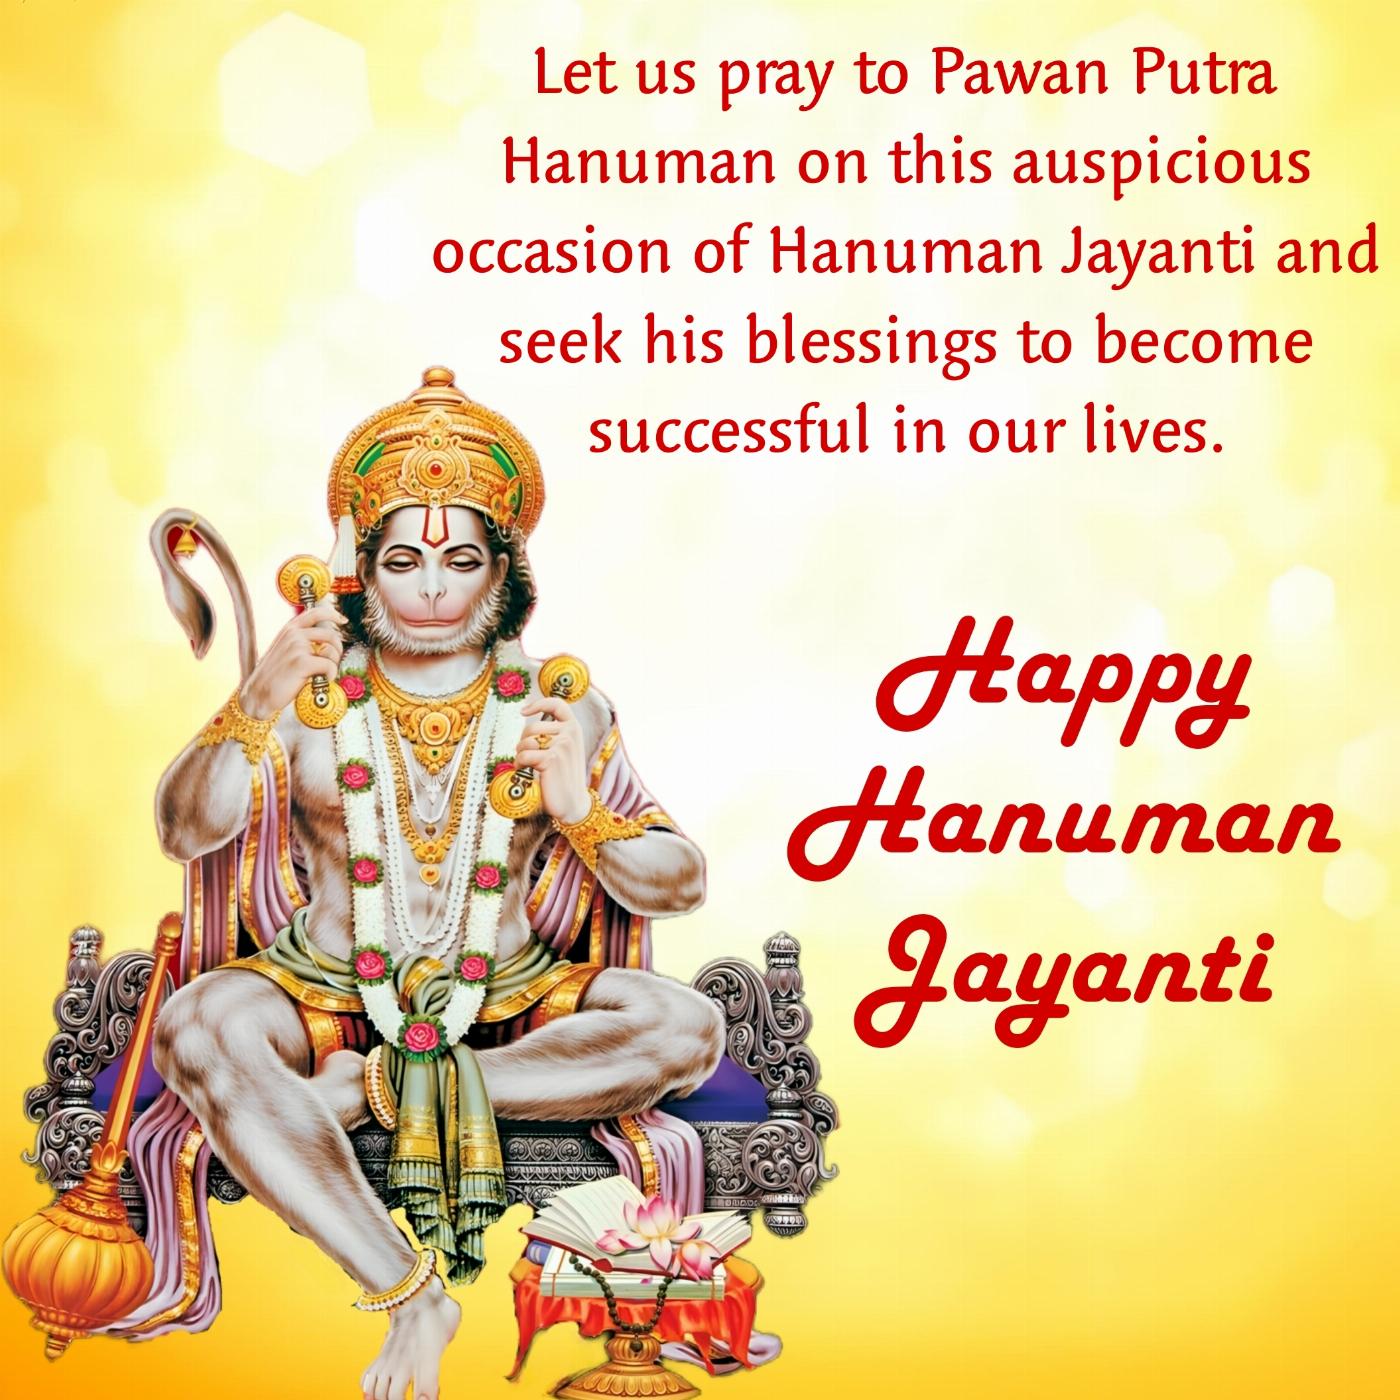 Let us pray to Pawan Putra Hanuman on this auspicious occasion